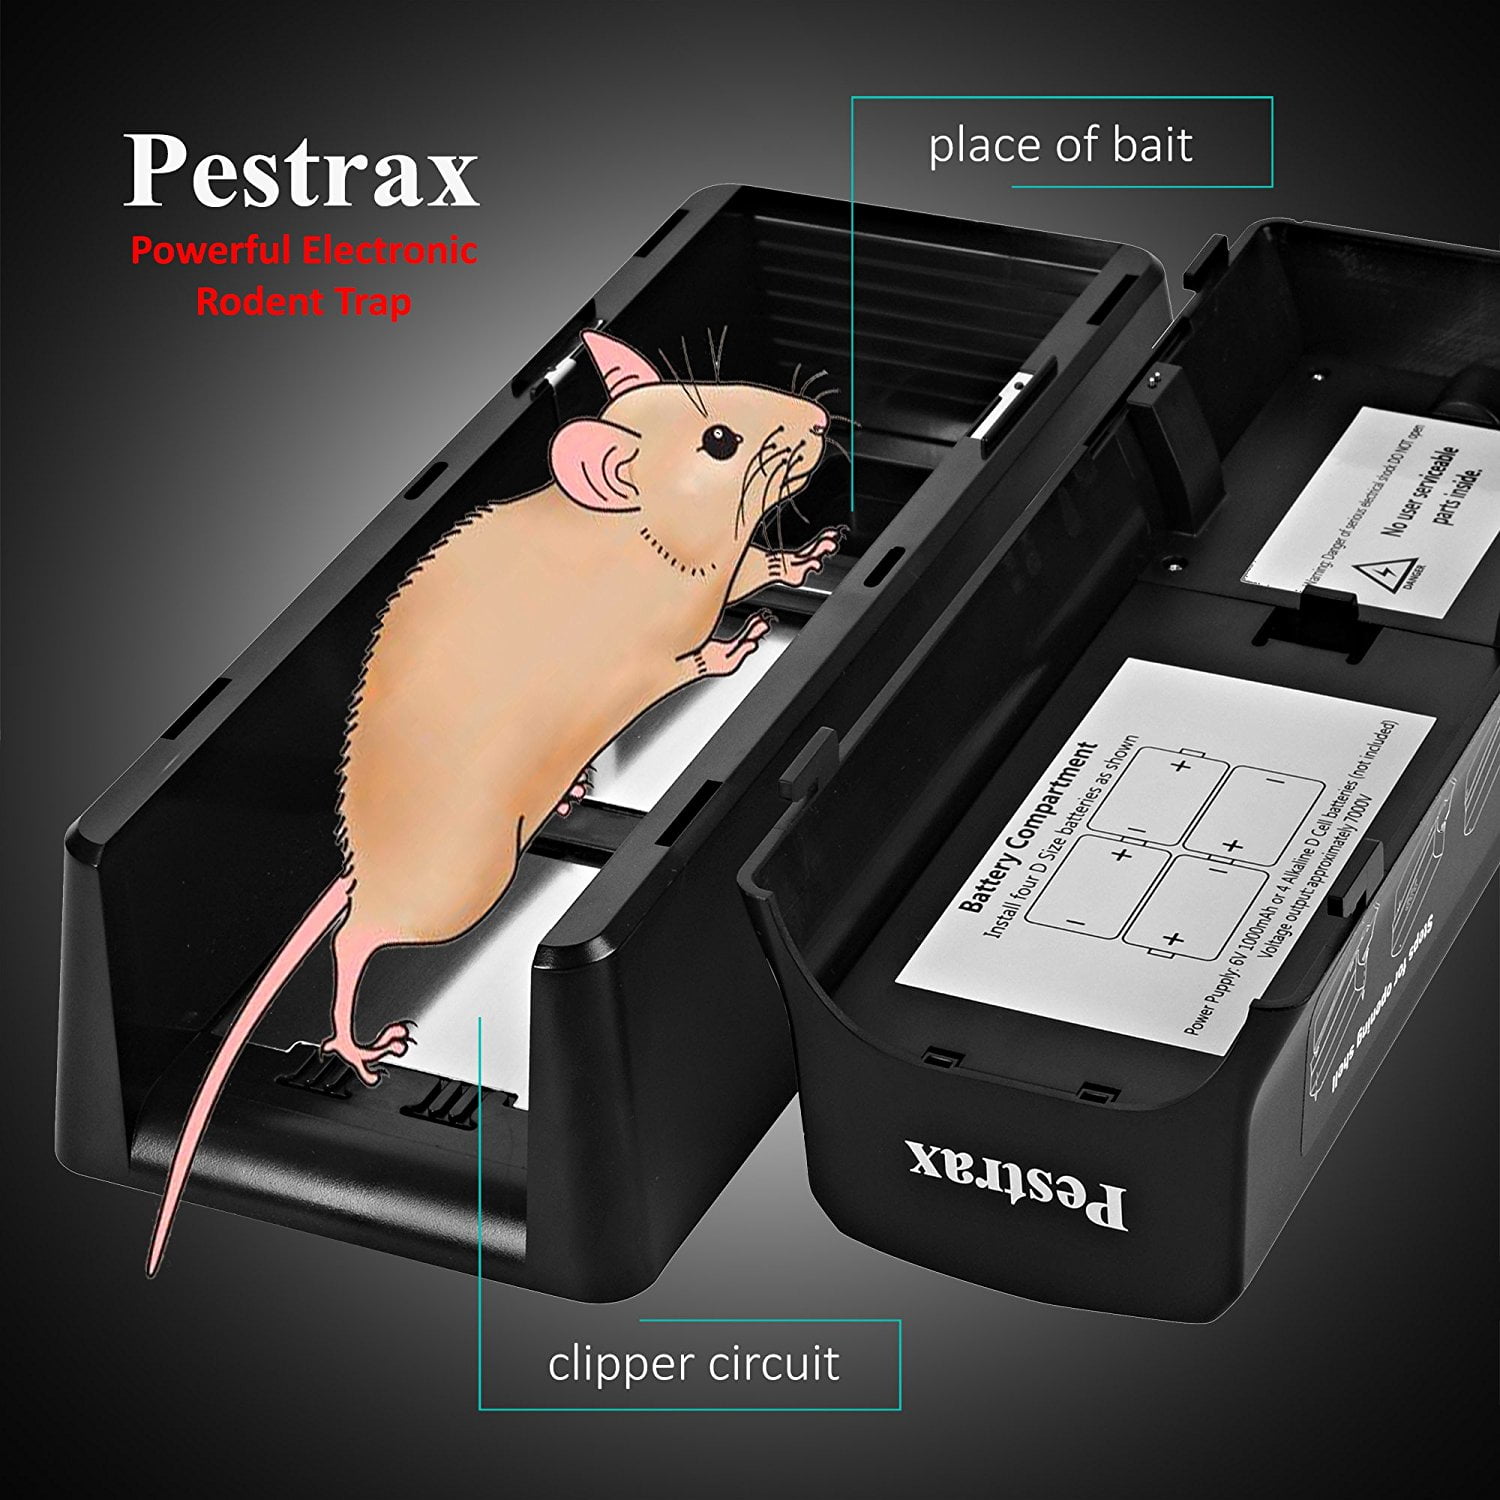 Electric Mouse Trap Intelligent High Pressure Trigger Electronic Rat Killer B9 